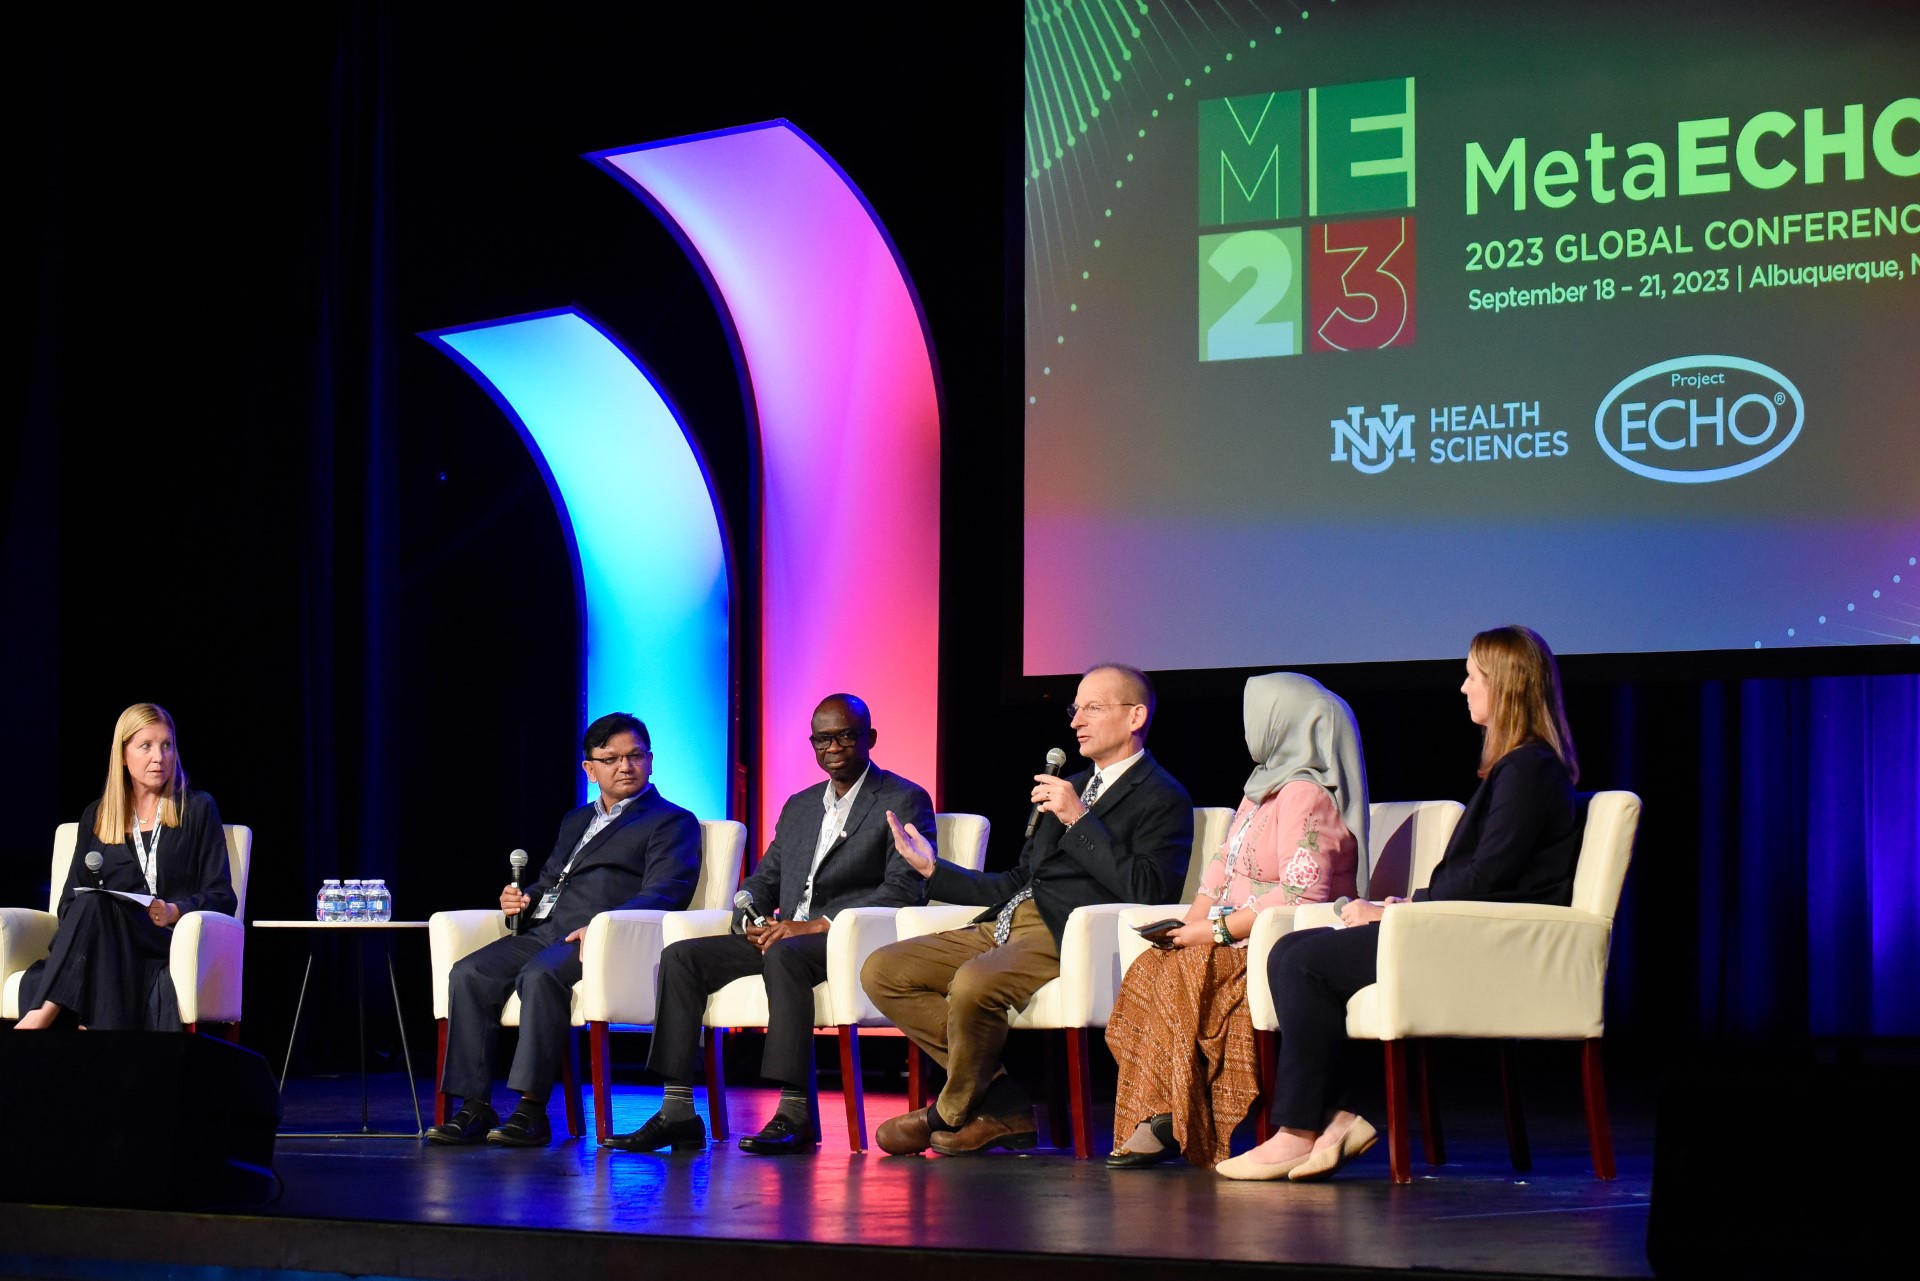 MetaECHO 2023 Global Conference